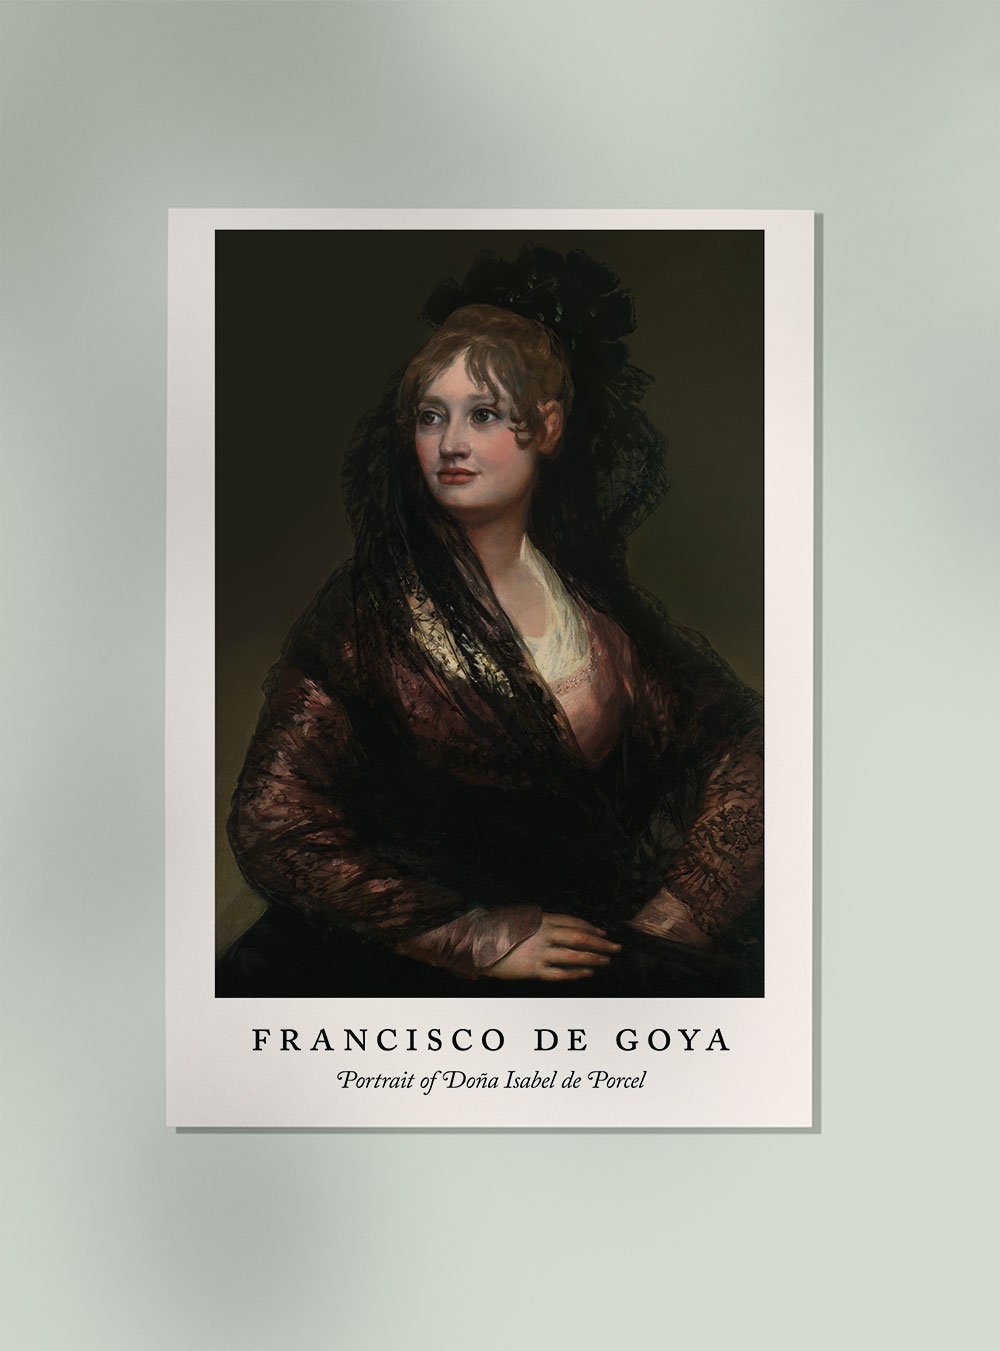 Portrait of Doña Isabel de Porcel by Francisco de Goya